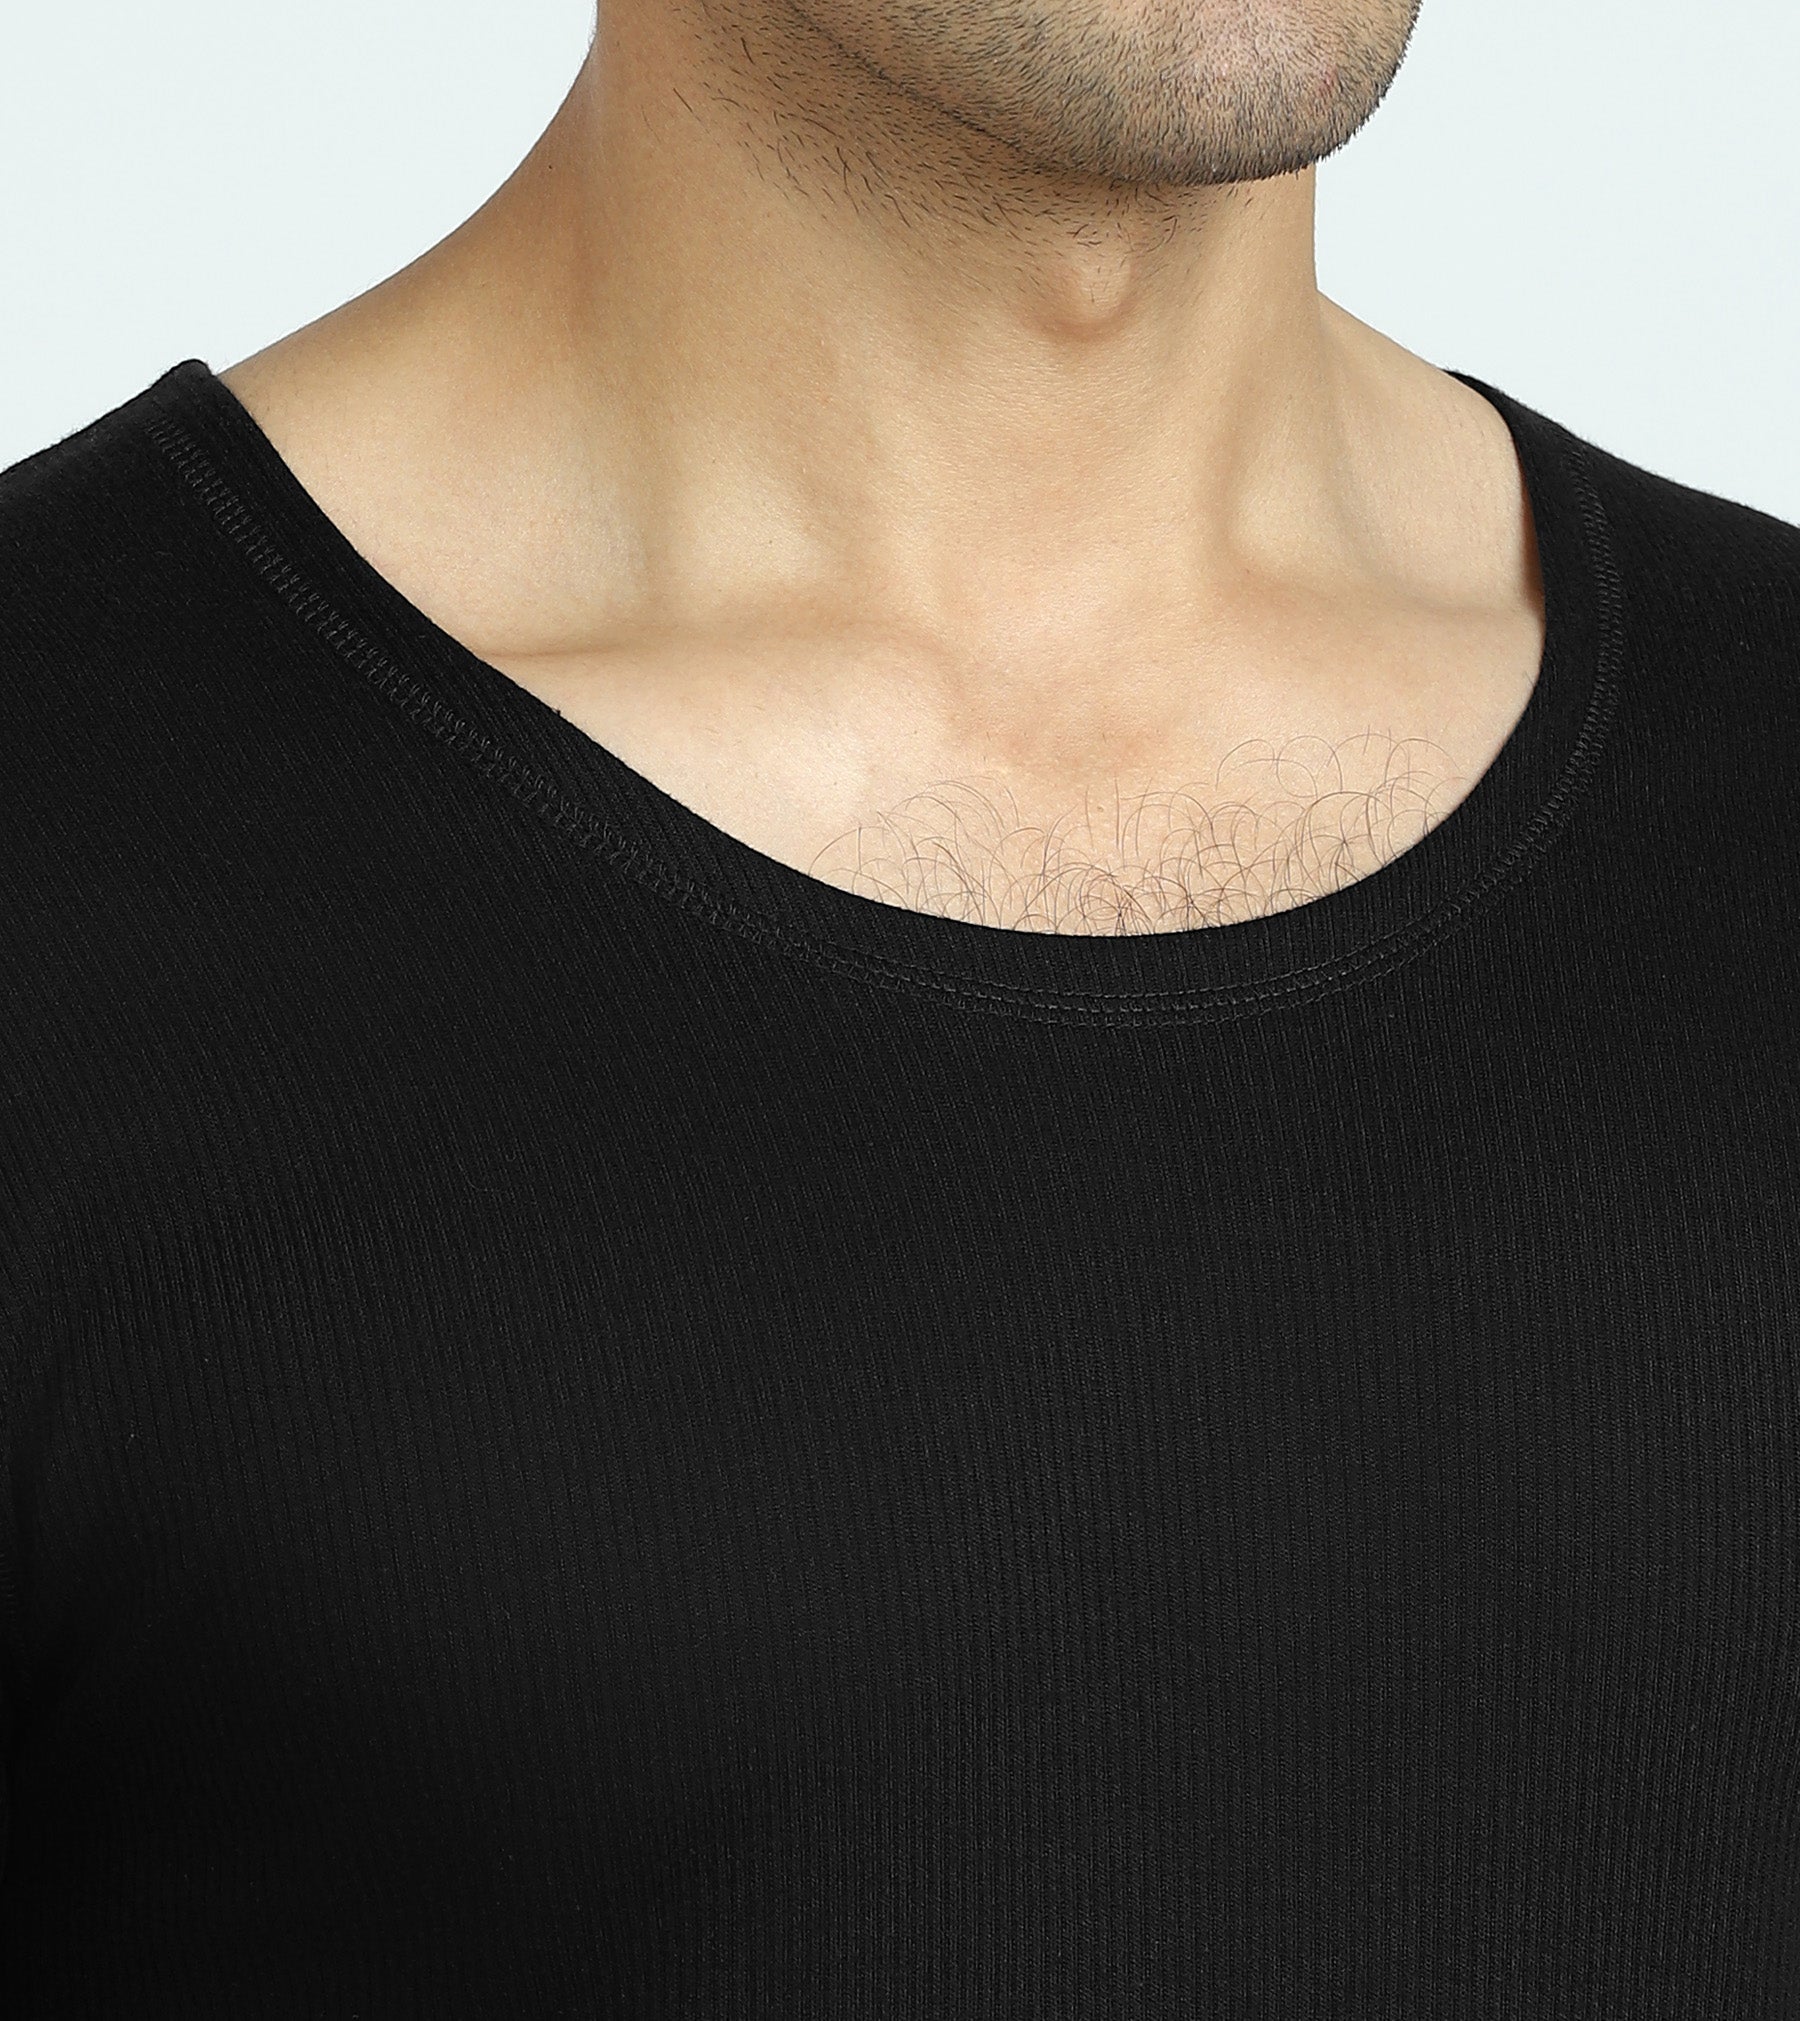 Alpine Cotton Rich Short Sleeve Thermal Set For Men Pitch Black - XYXX Mens Apparels